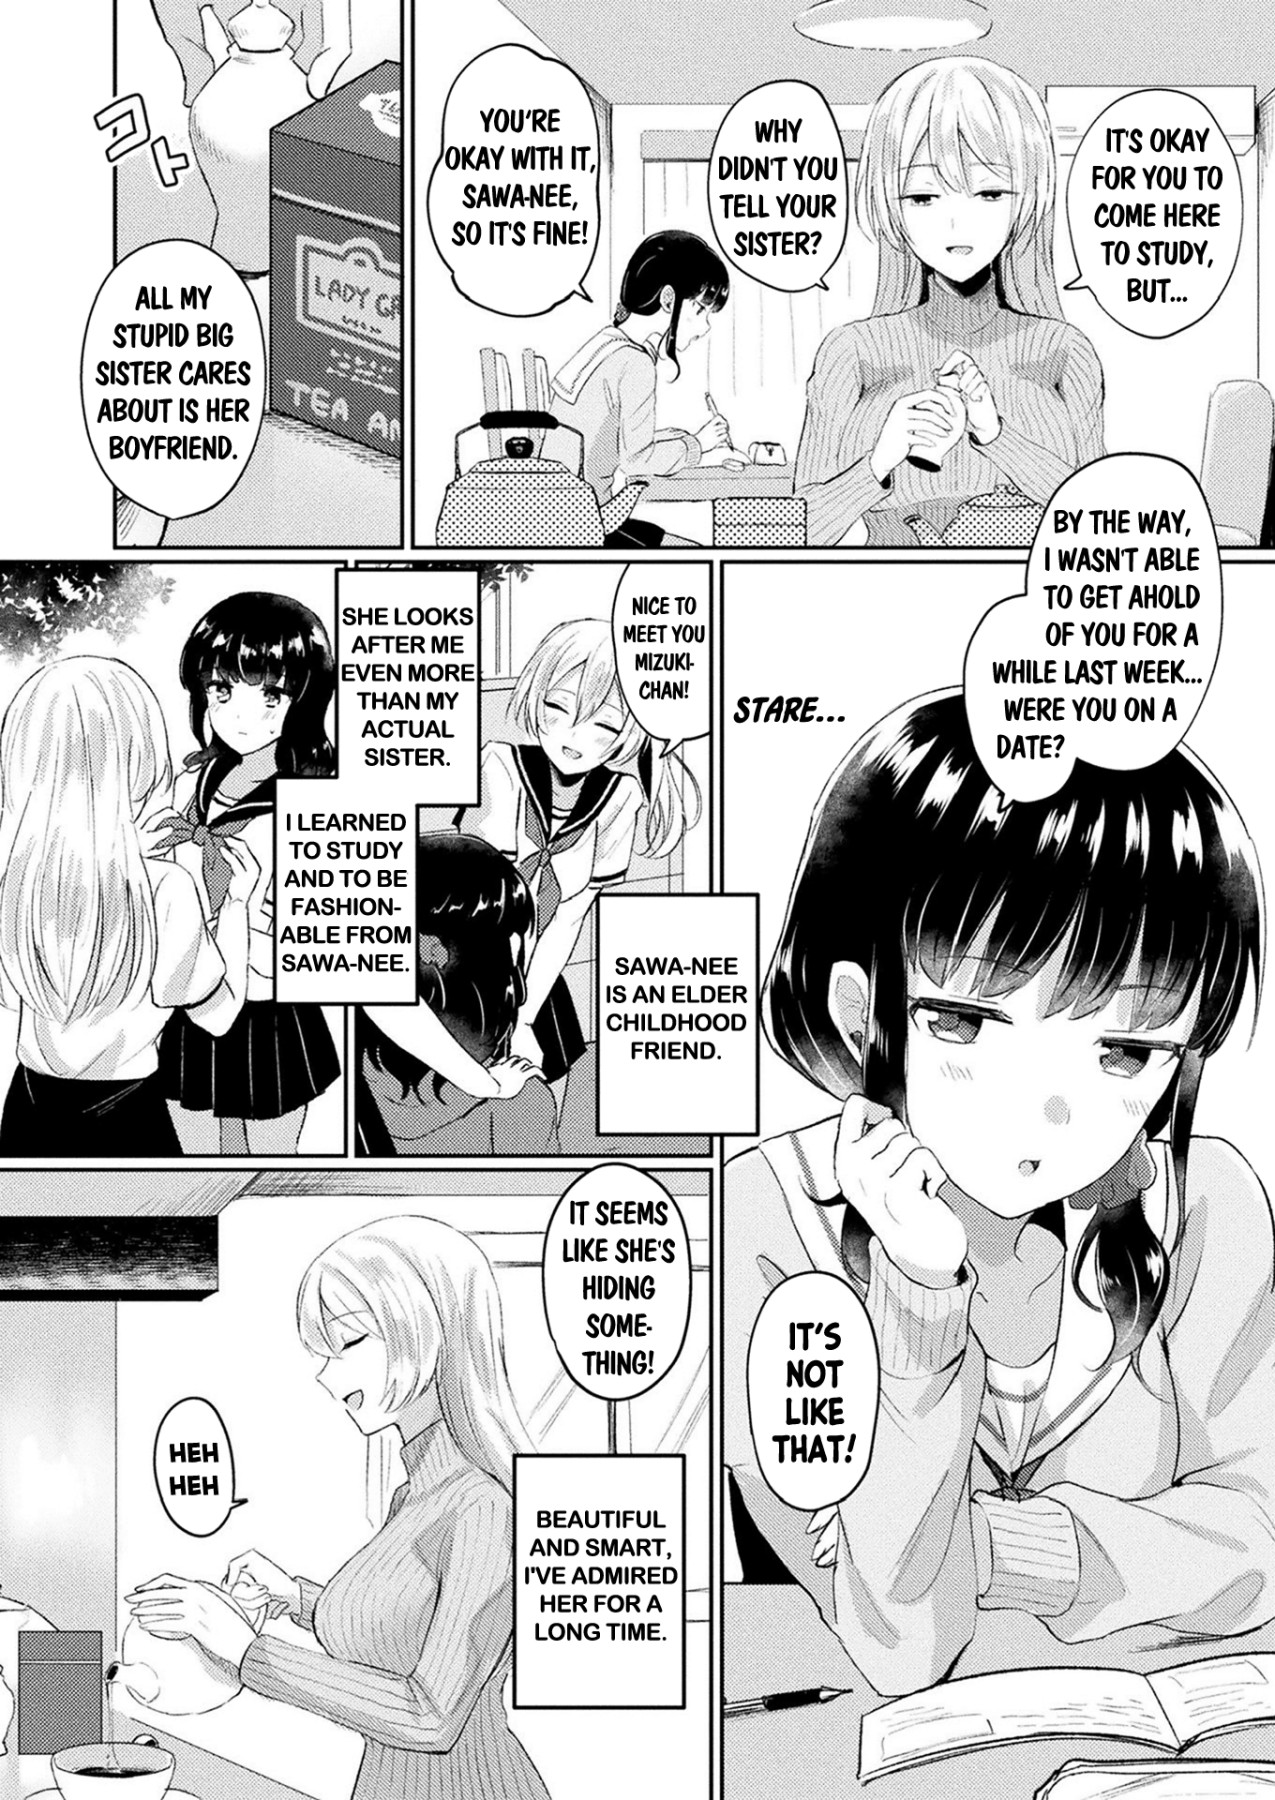 Hentai Manga Comic-Why Did You Grow This On Me!?-Read-2